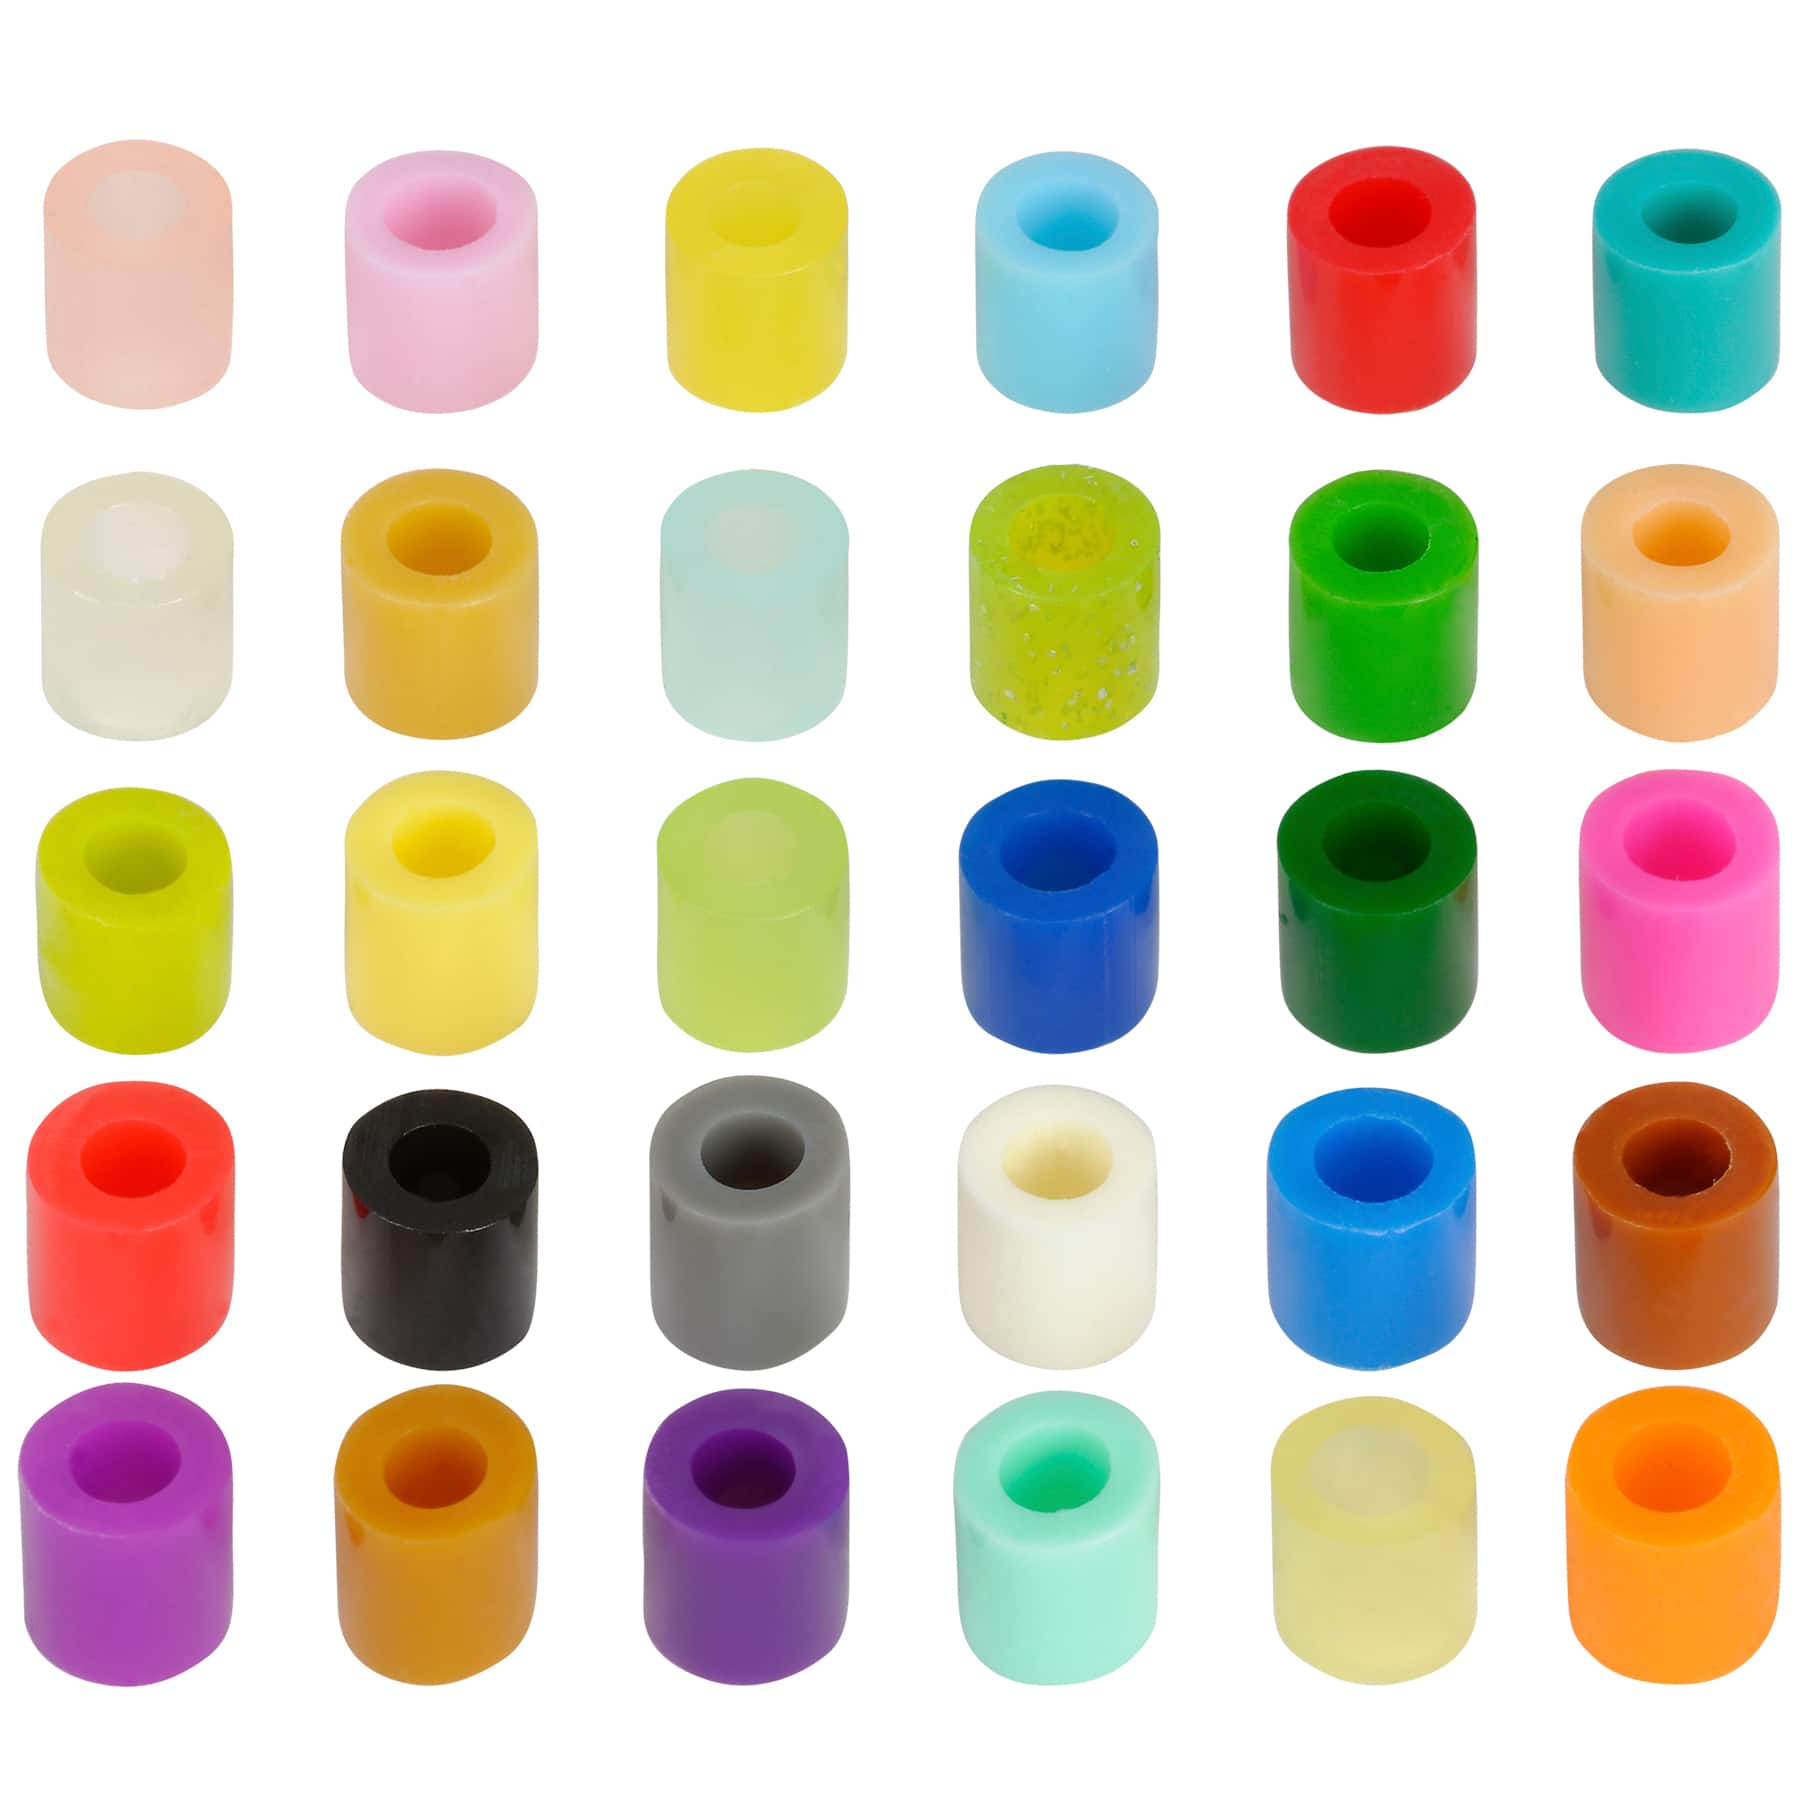 Perler Bead Color Chart 2019